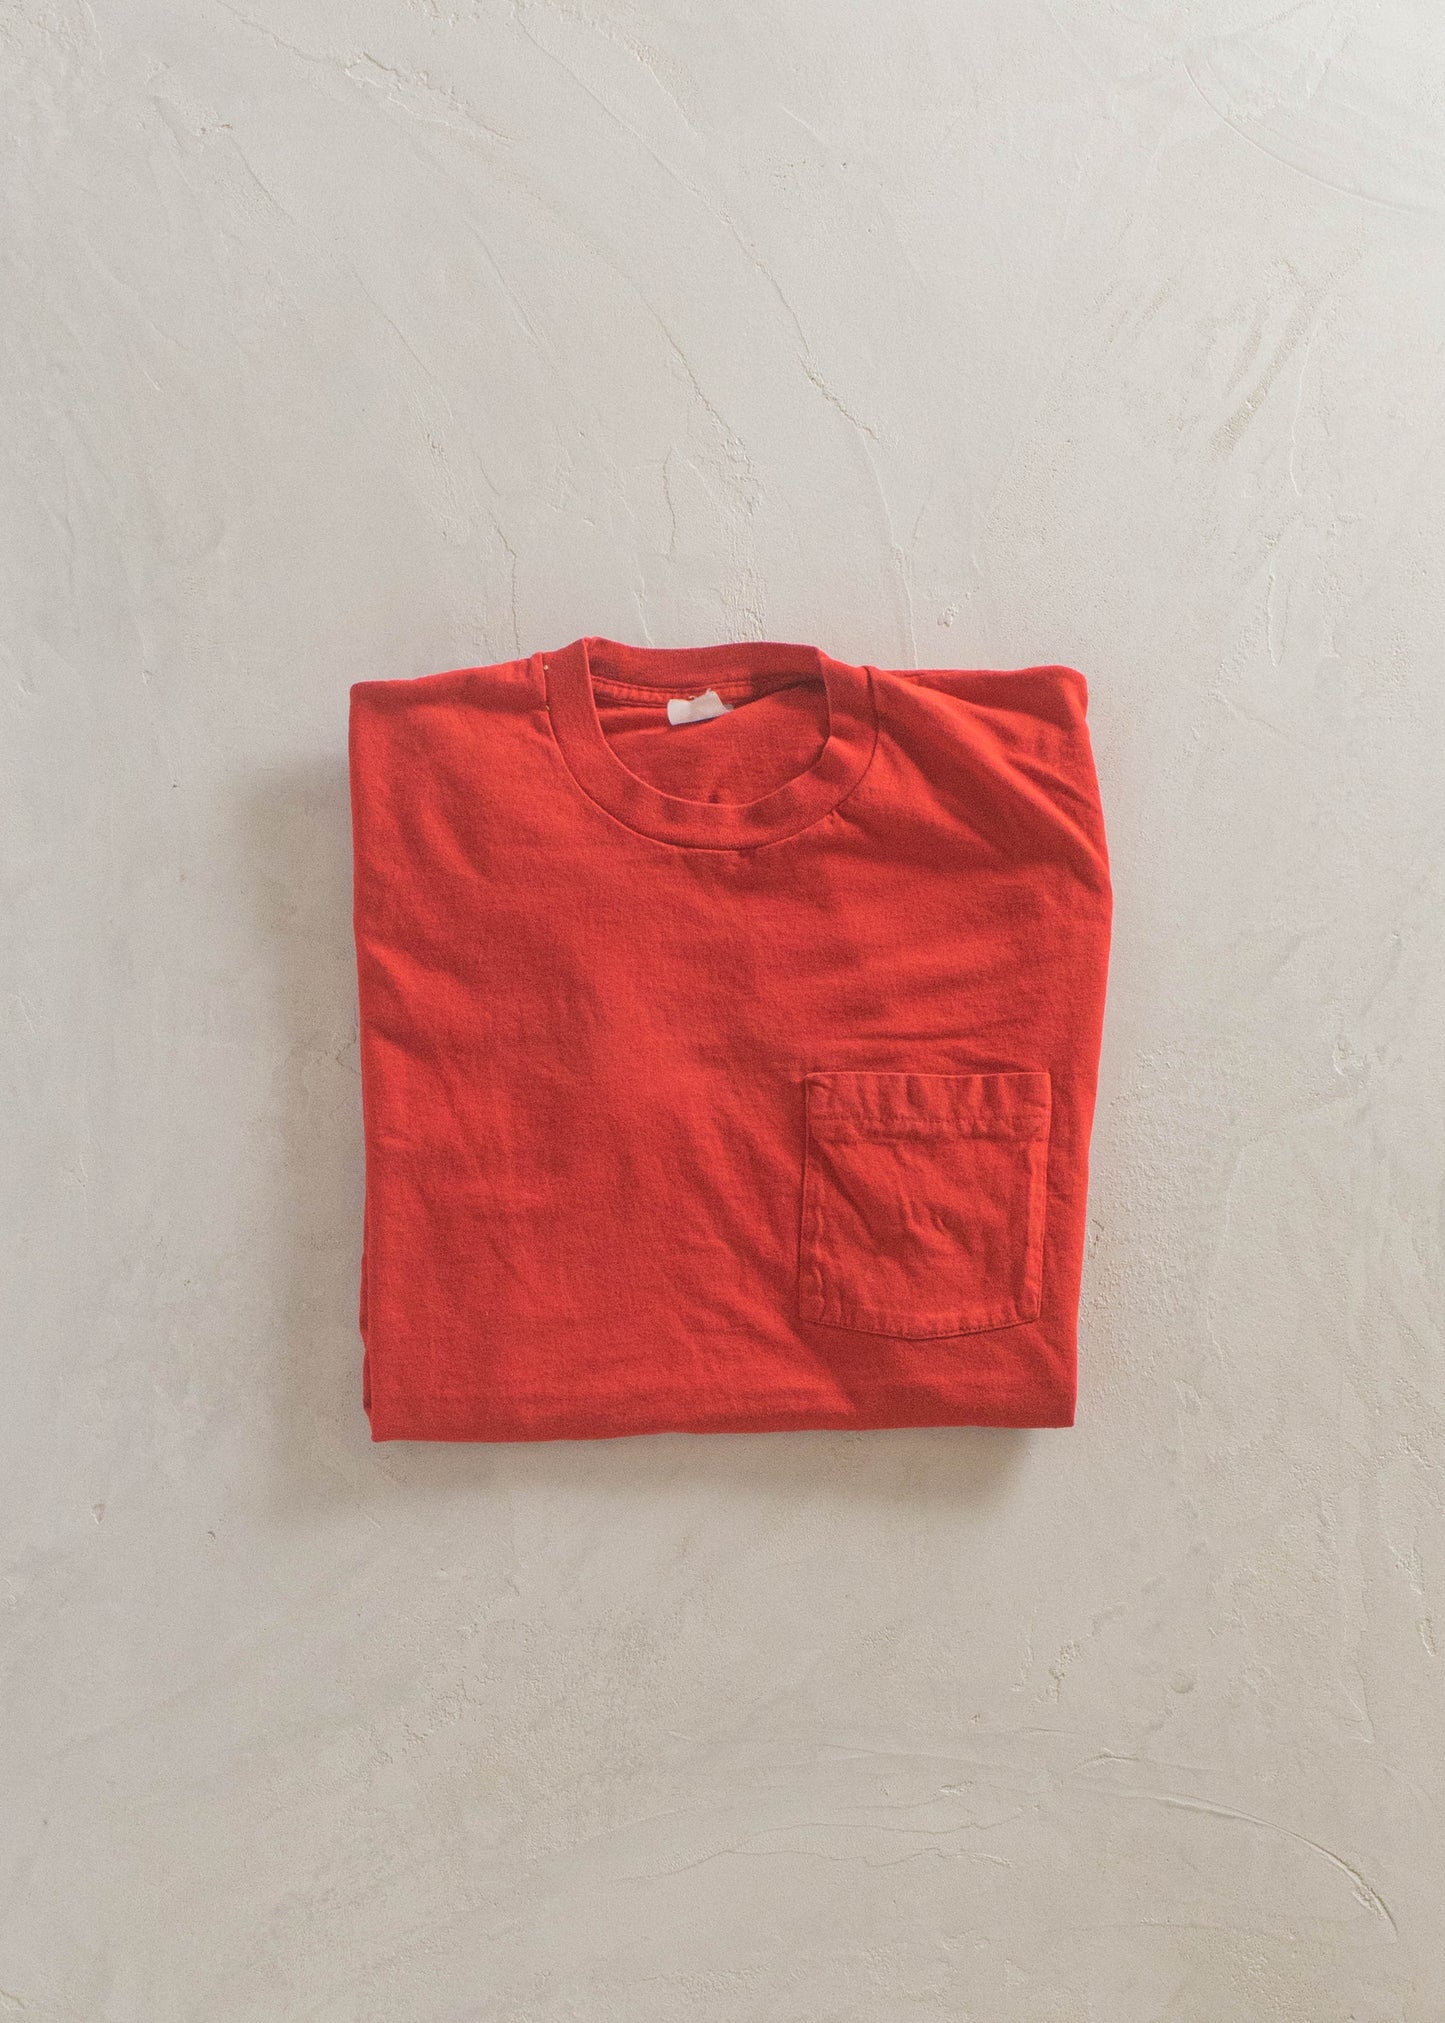 1980s Selvedge Pocket T-Shirt Size M/L